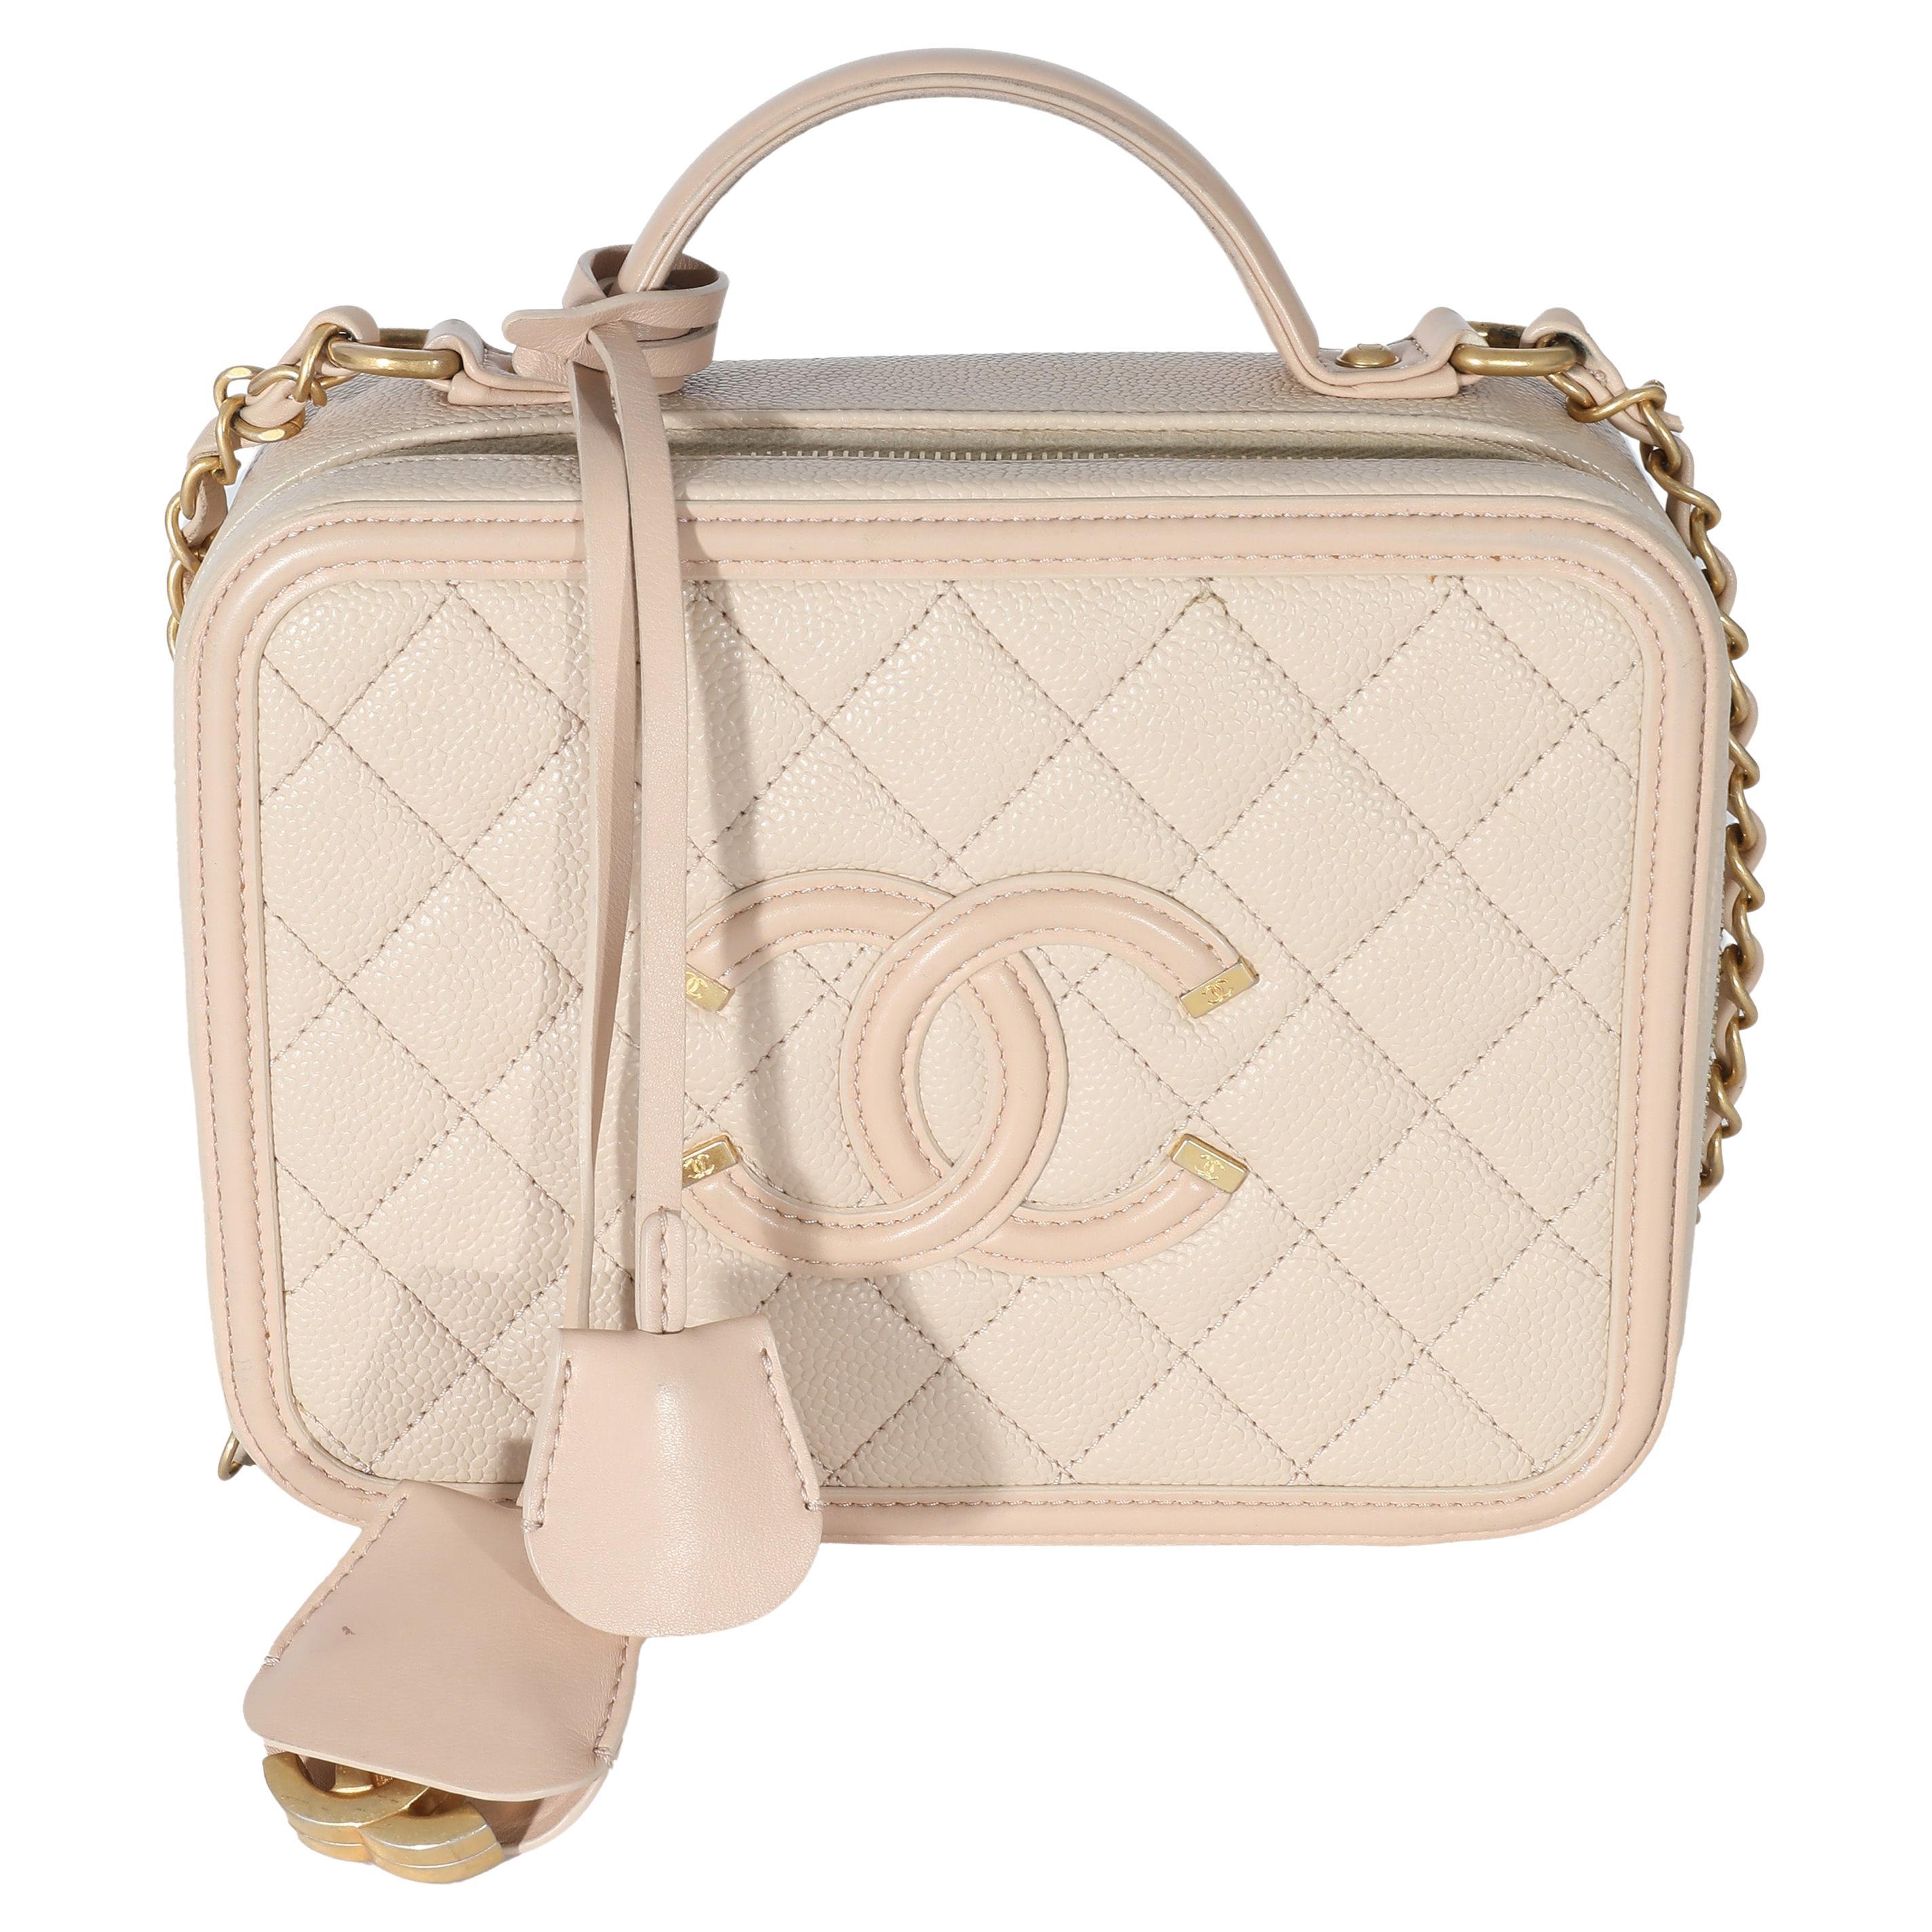 Chanel Pink PVC & Multicolor Patent Leather CC Vanity Case